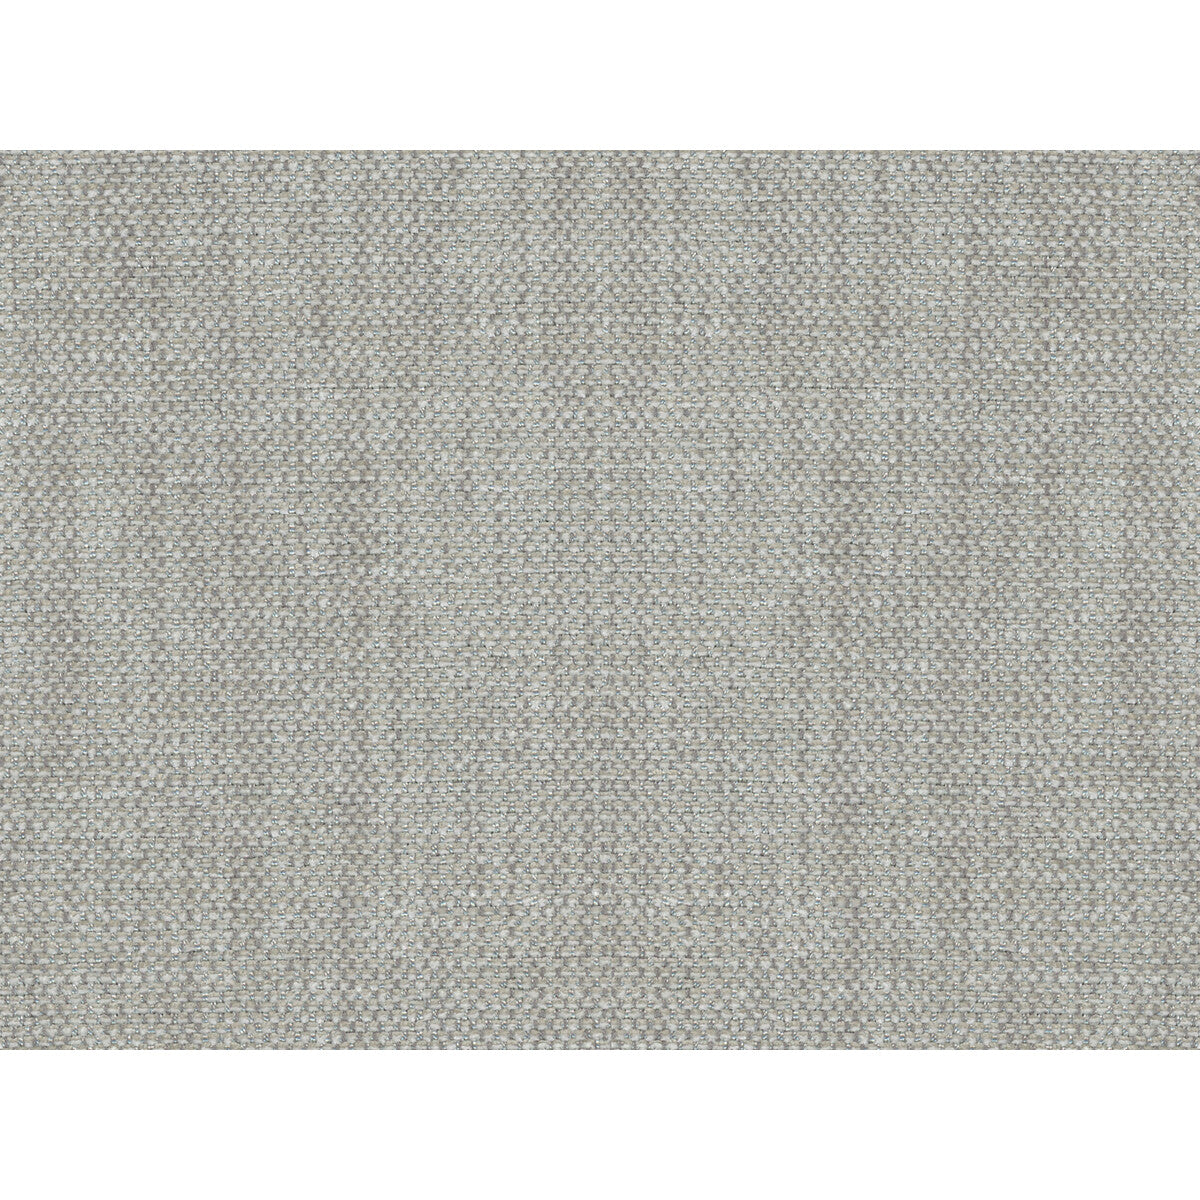 Kravet Smart fabric in 34730-11 color - pattern 34730.11.0 - by Kravet Smart in the Smart collection